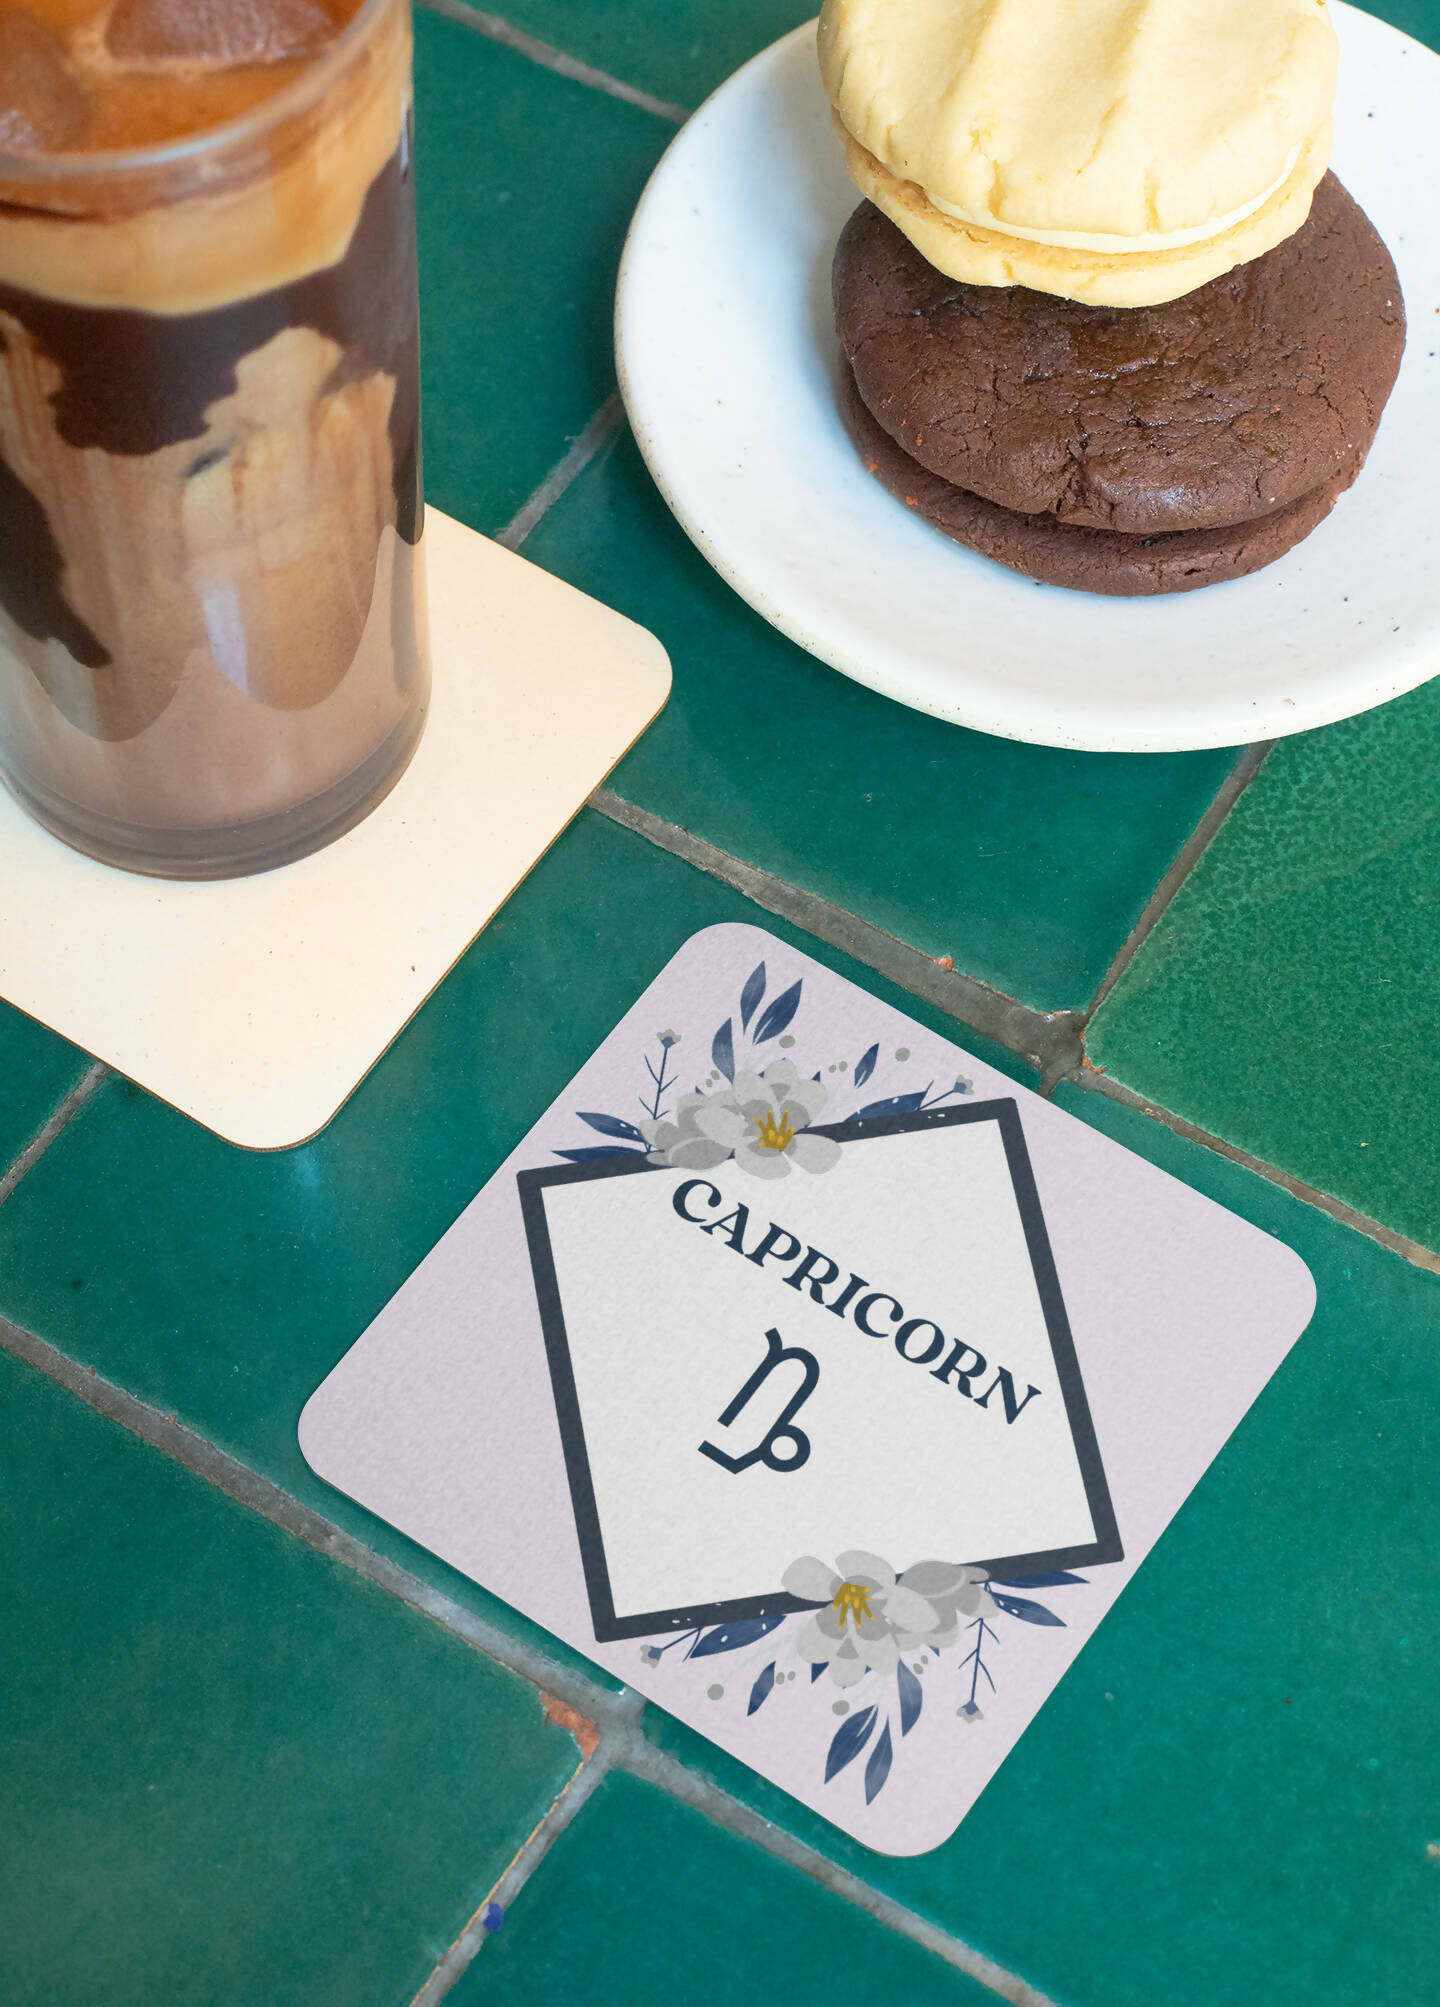 Capricorn 11oz Floral Mug & Coaster Set